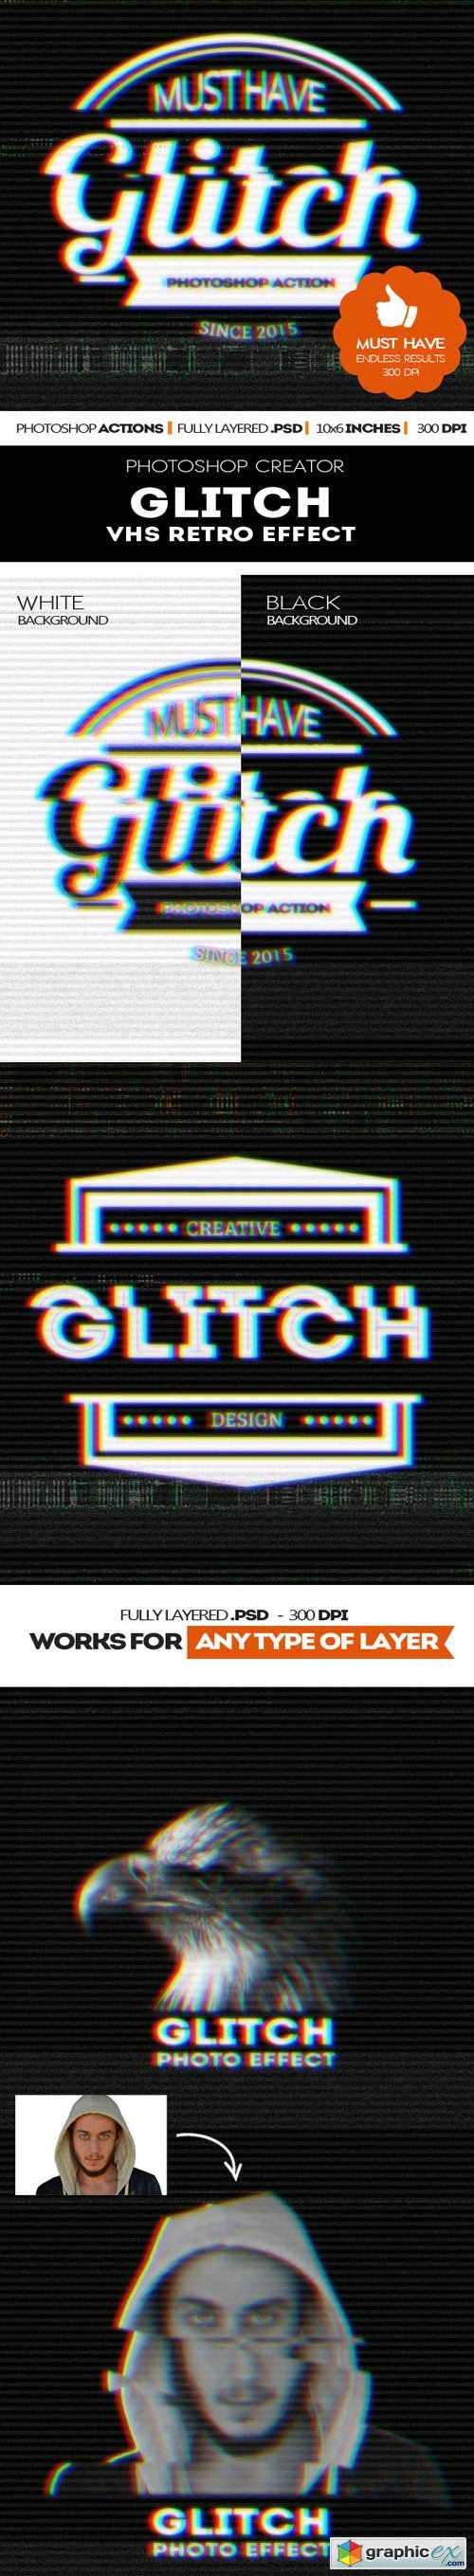 Graphicriver - Glitch VHS Corrupt Image Effect Photoshop Actions 11939518